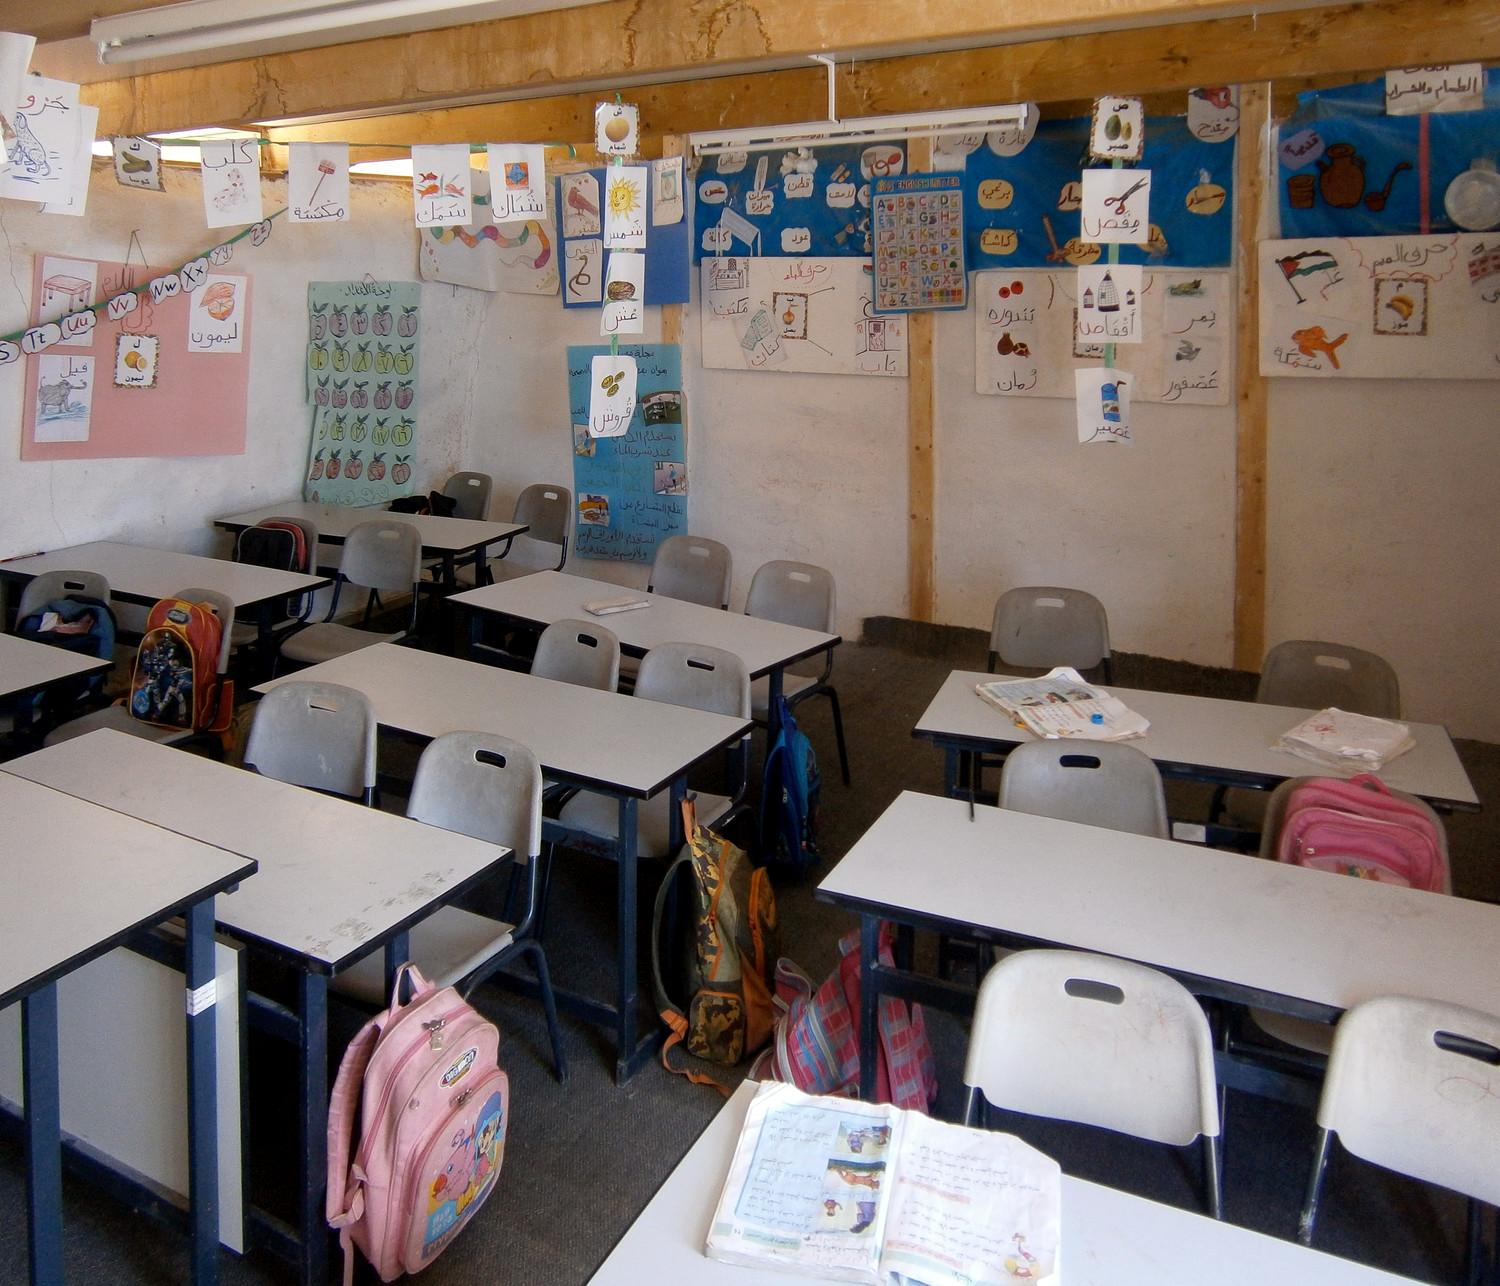 A classroom interior